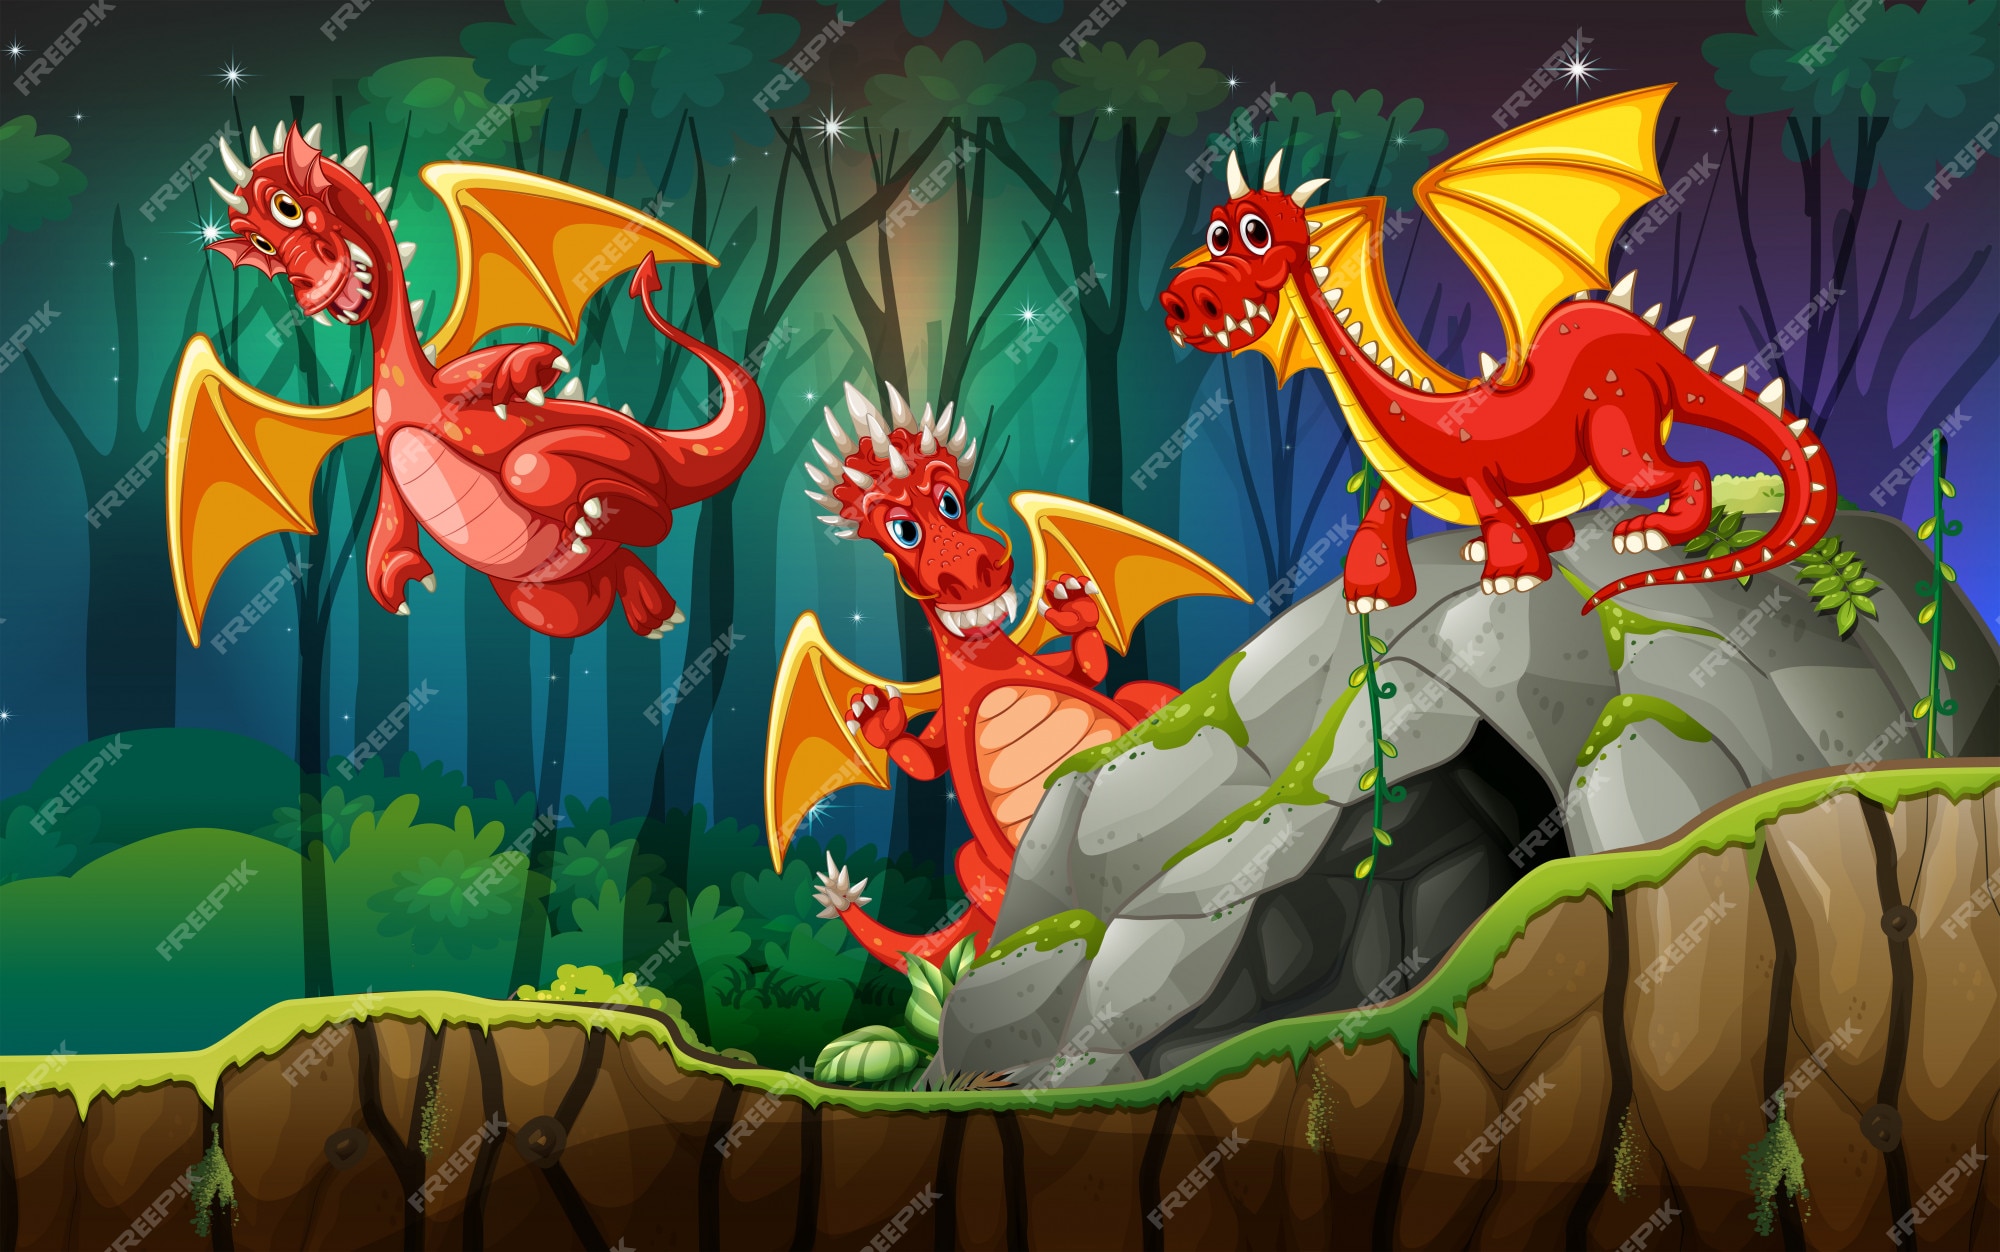 Page 2 | Dragon Animation Images - Free Download on Freepik